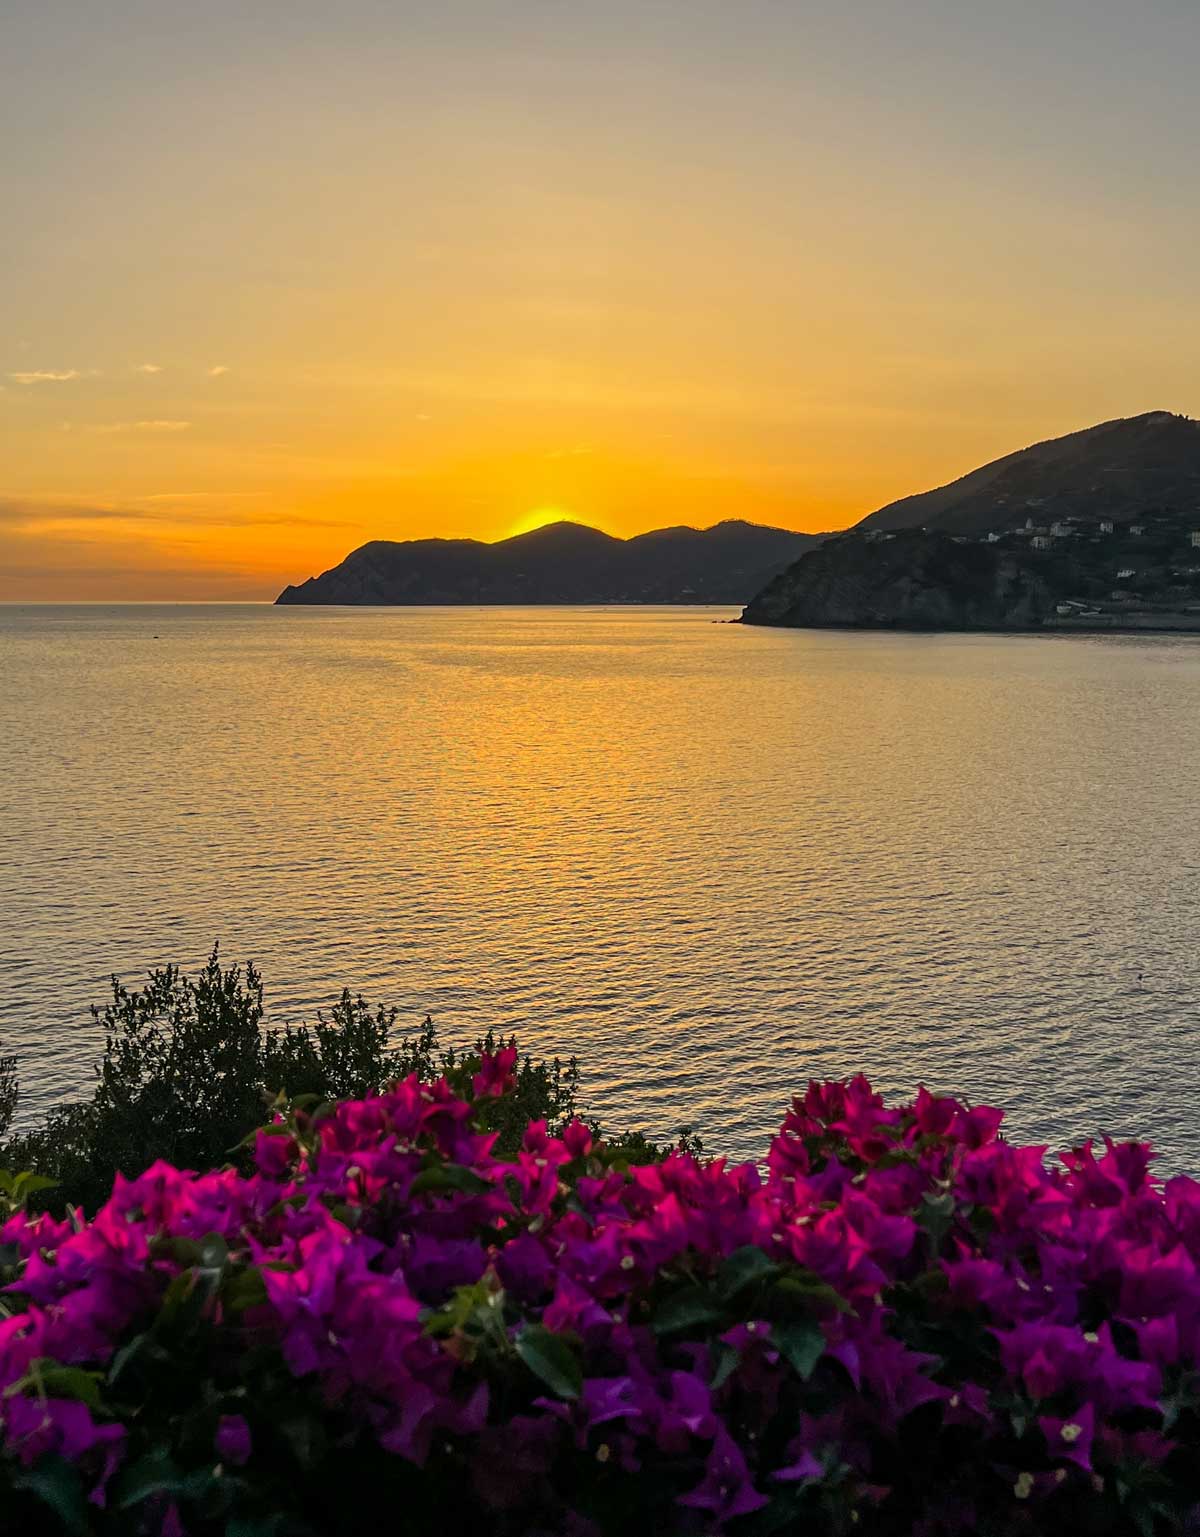 orange sunset over the the Mediterranean sea